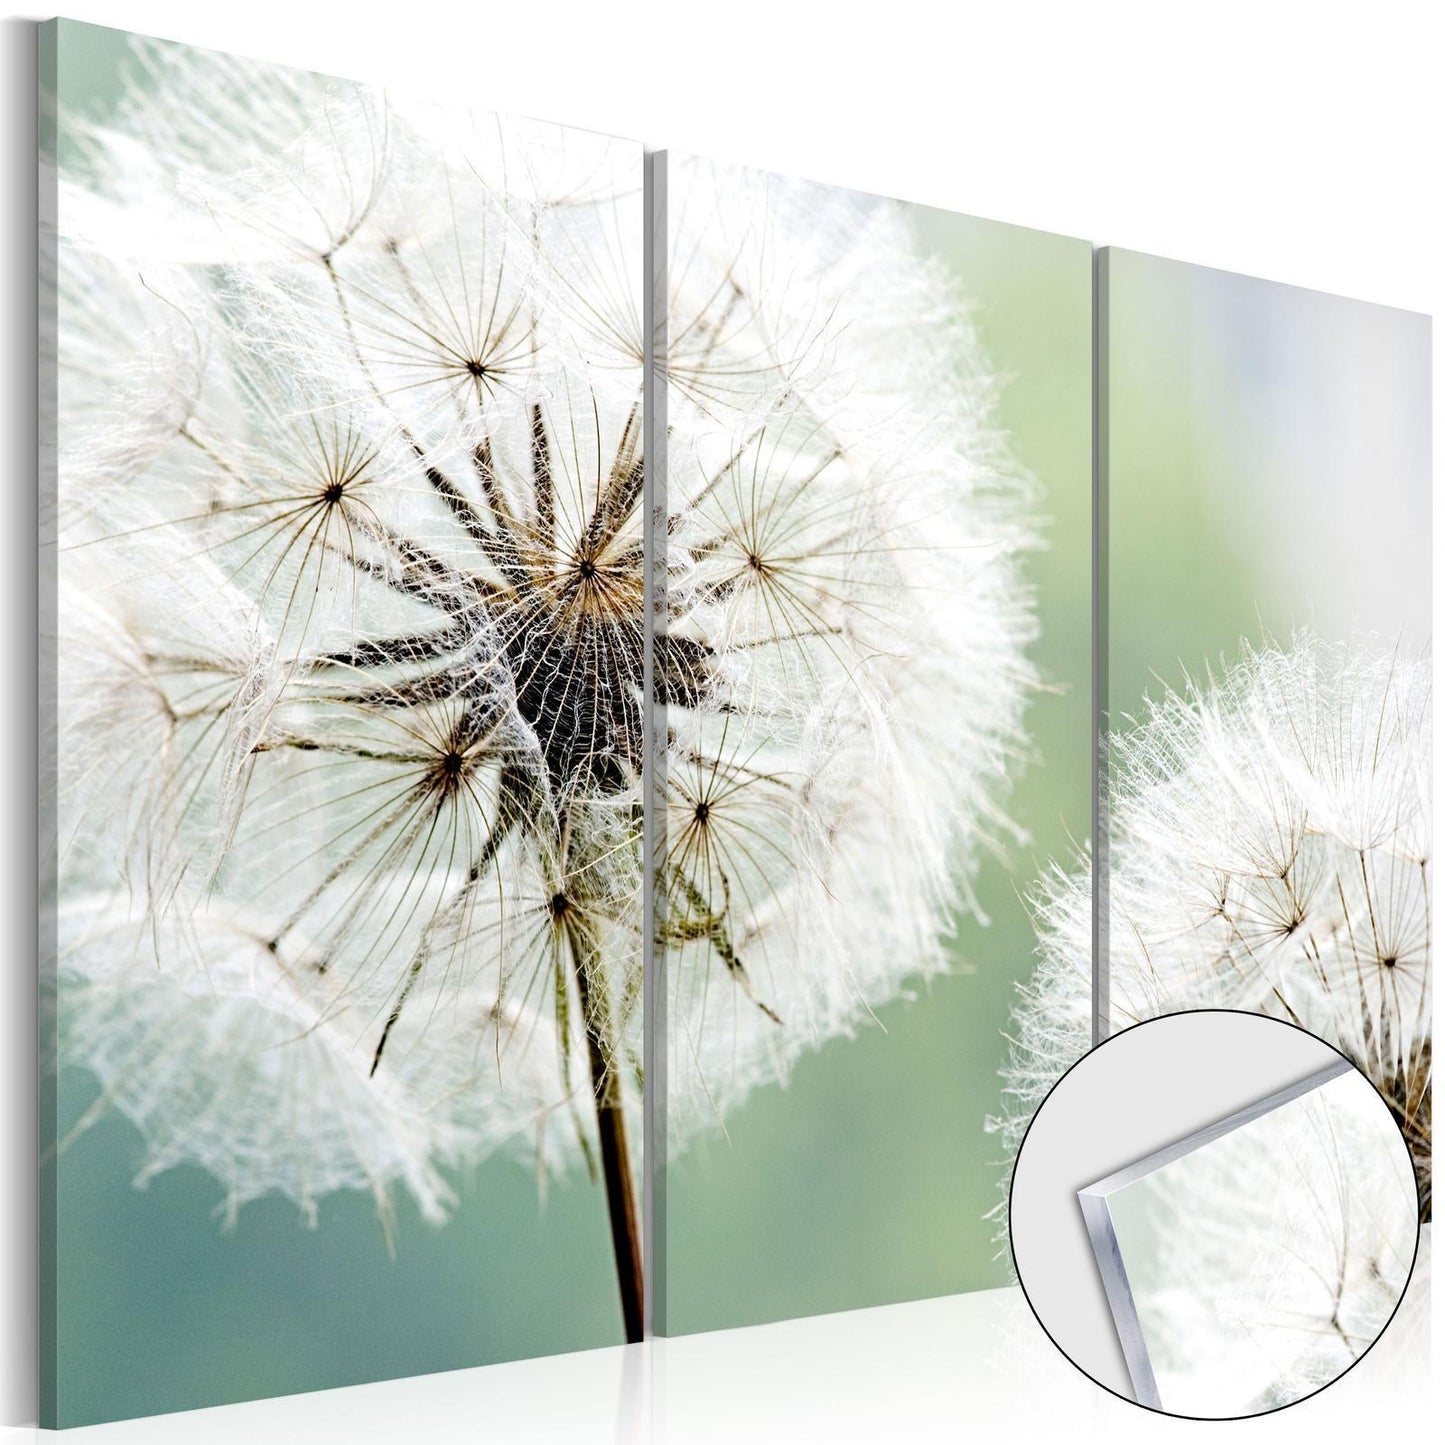 Image on acrylic glass - Fluffy Dandelions [Glass]